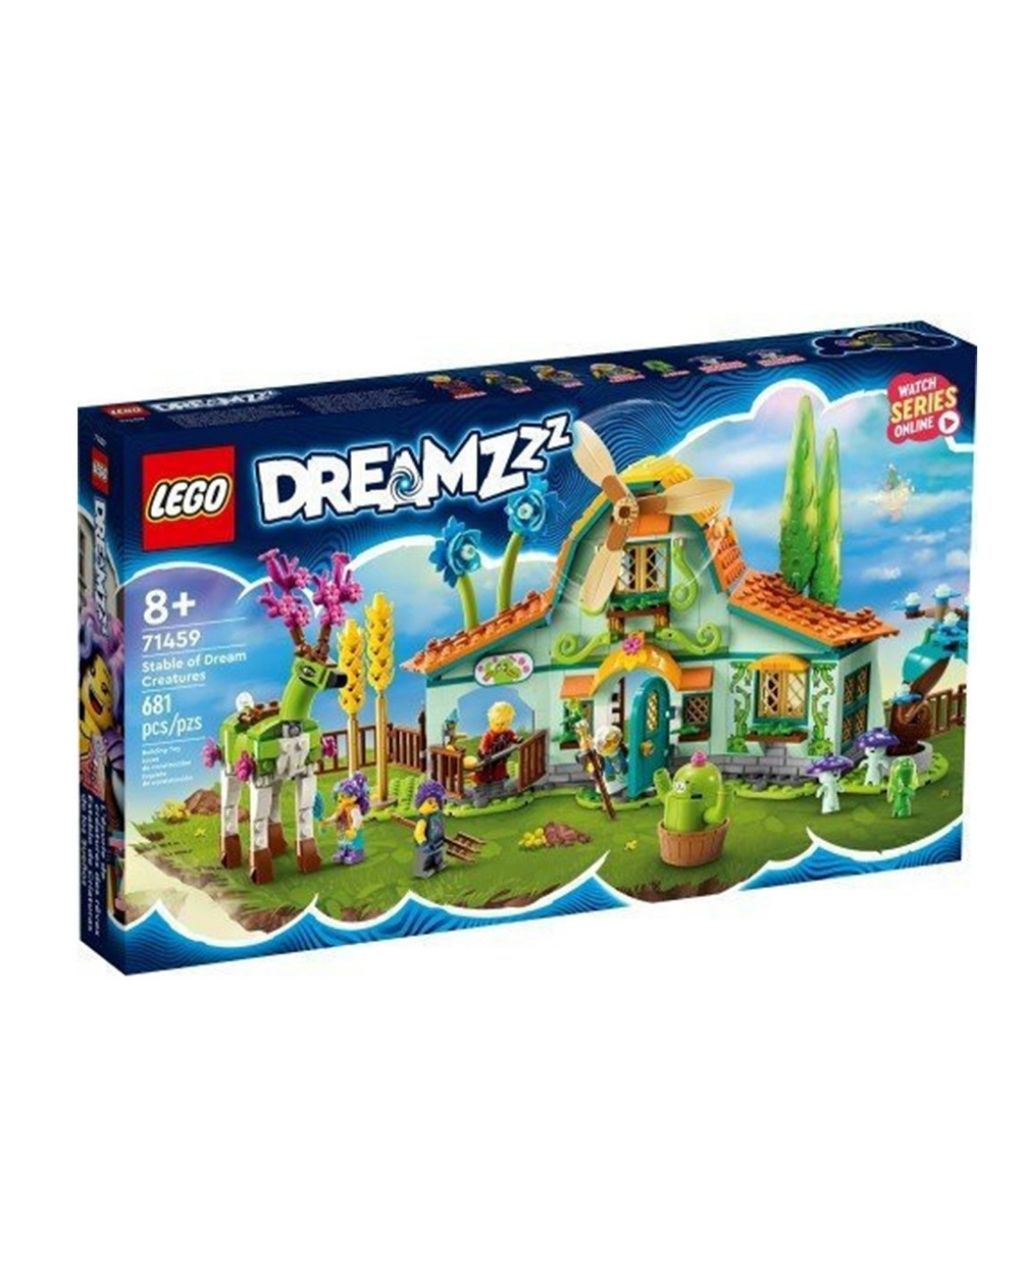 Lego dreamzzz ο στάβλος των ονειροπλασμάτων 71459